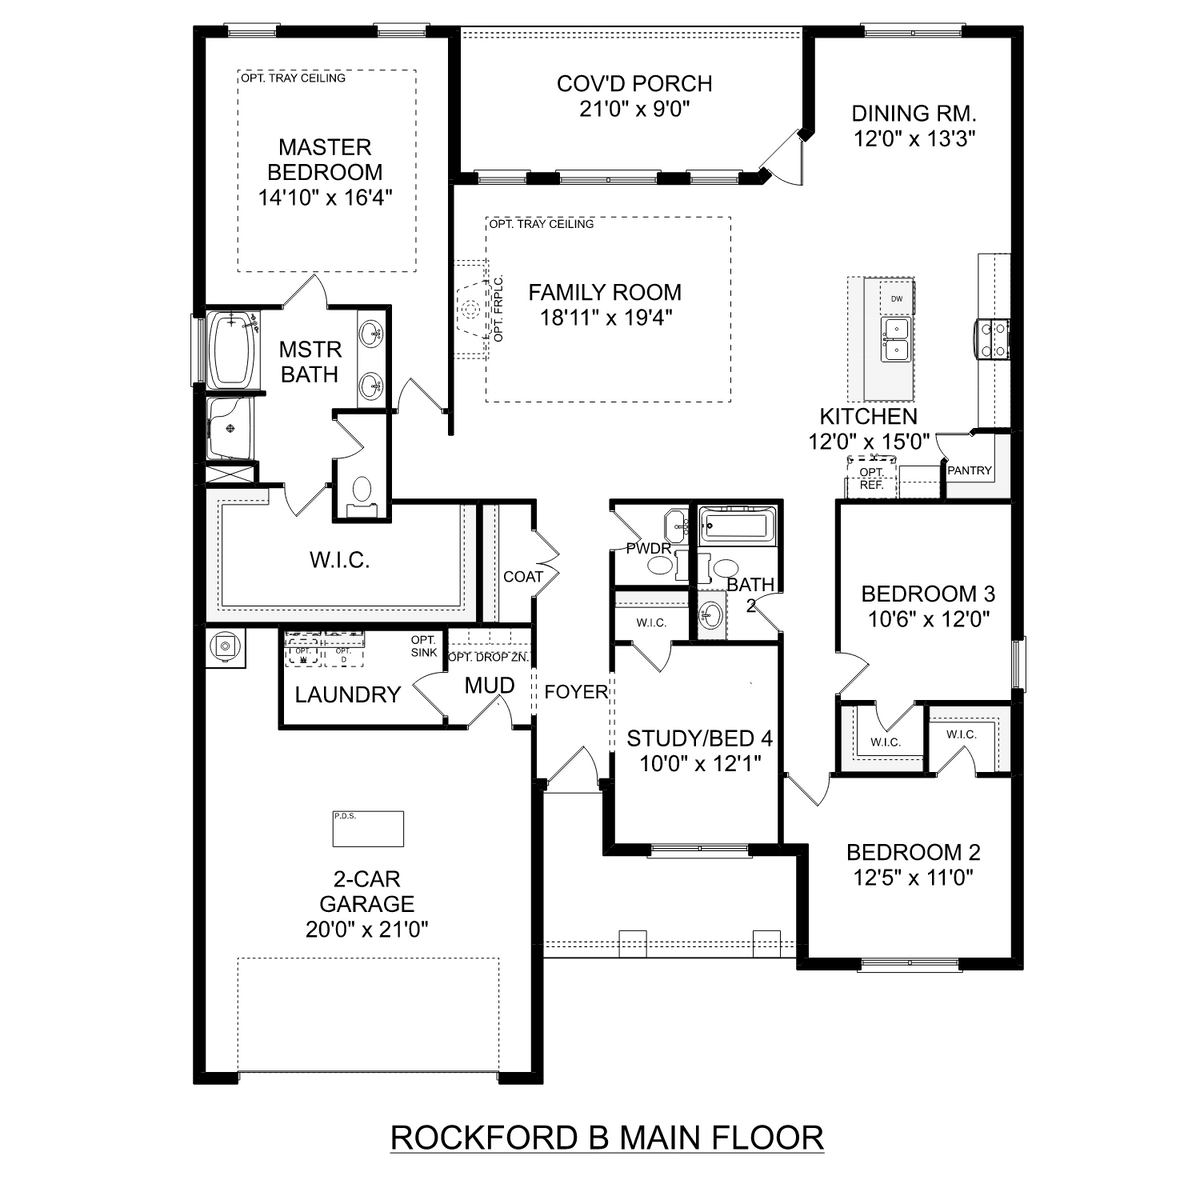 1 - The Rockford B floor plan layout for 2070 Austin Dr in Davidson Homes' North Ridge community.